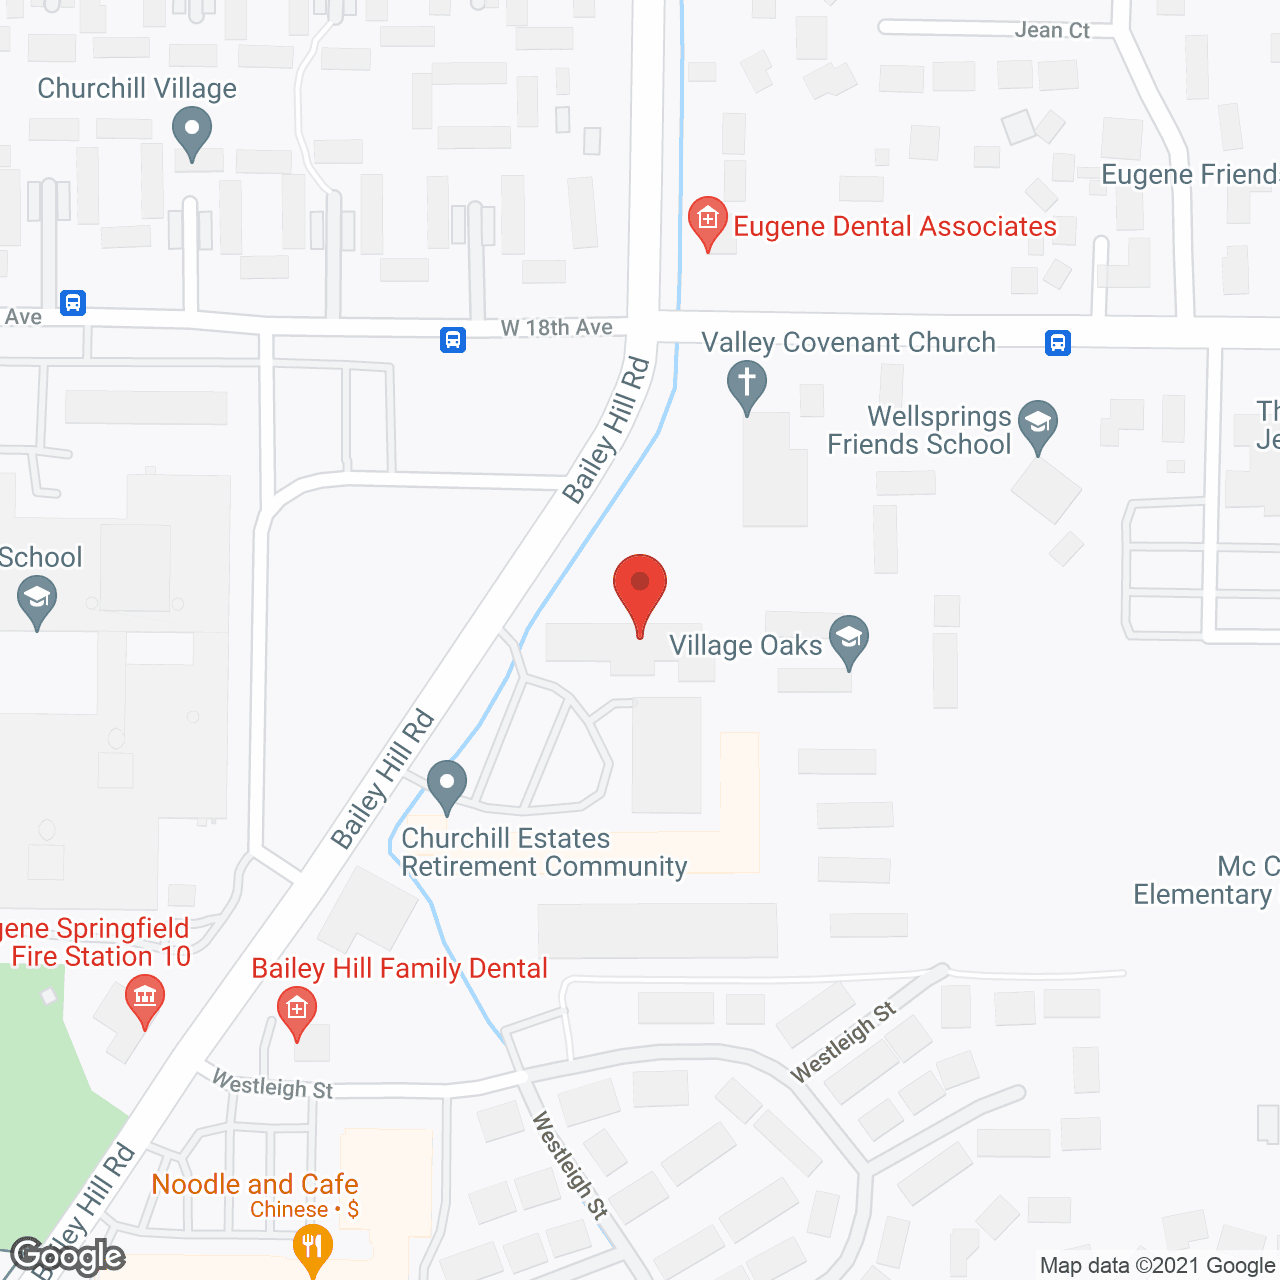 Churchill Estates in google map